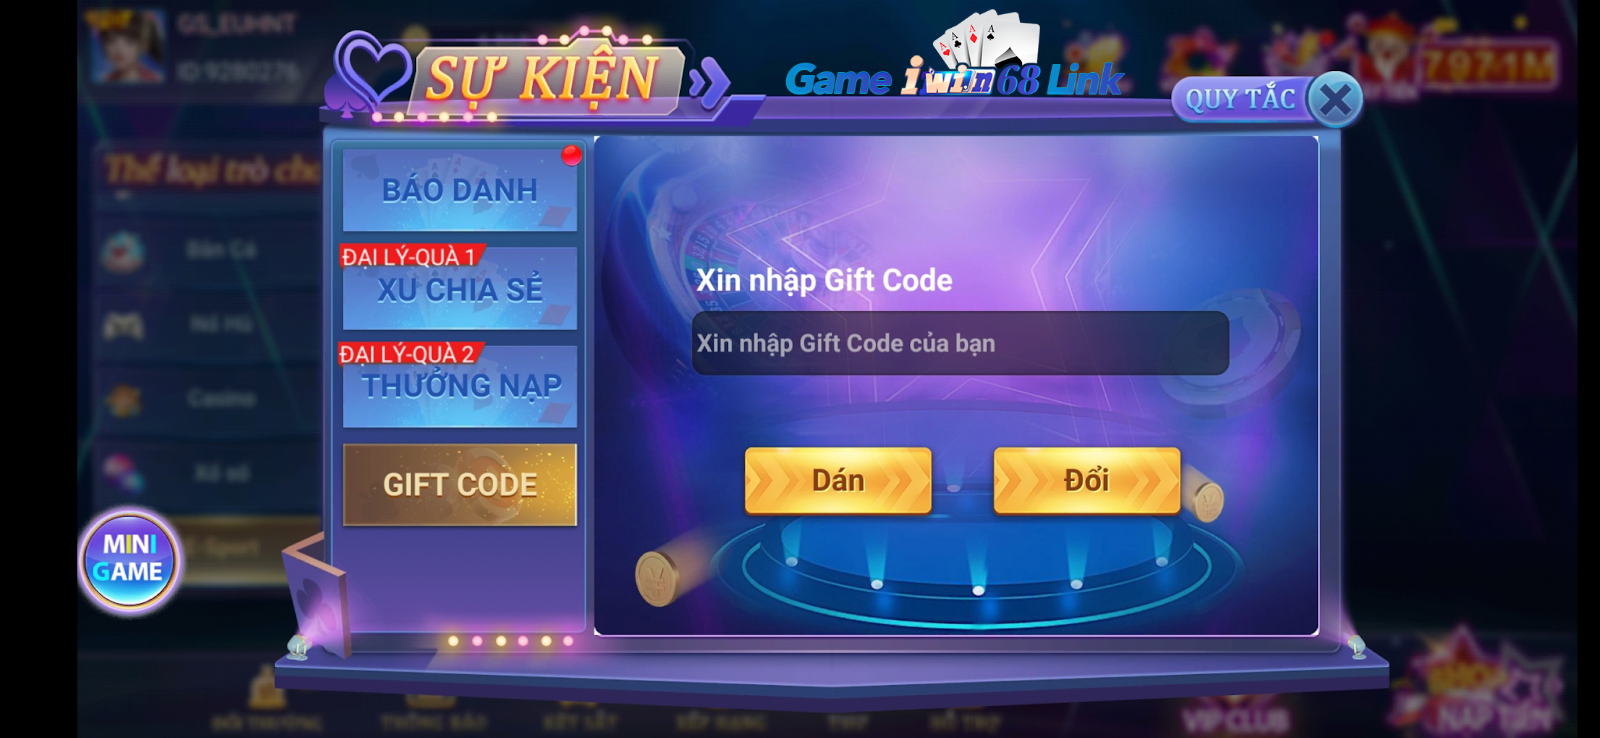 gift code tai iwin68